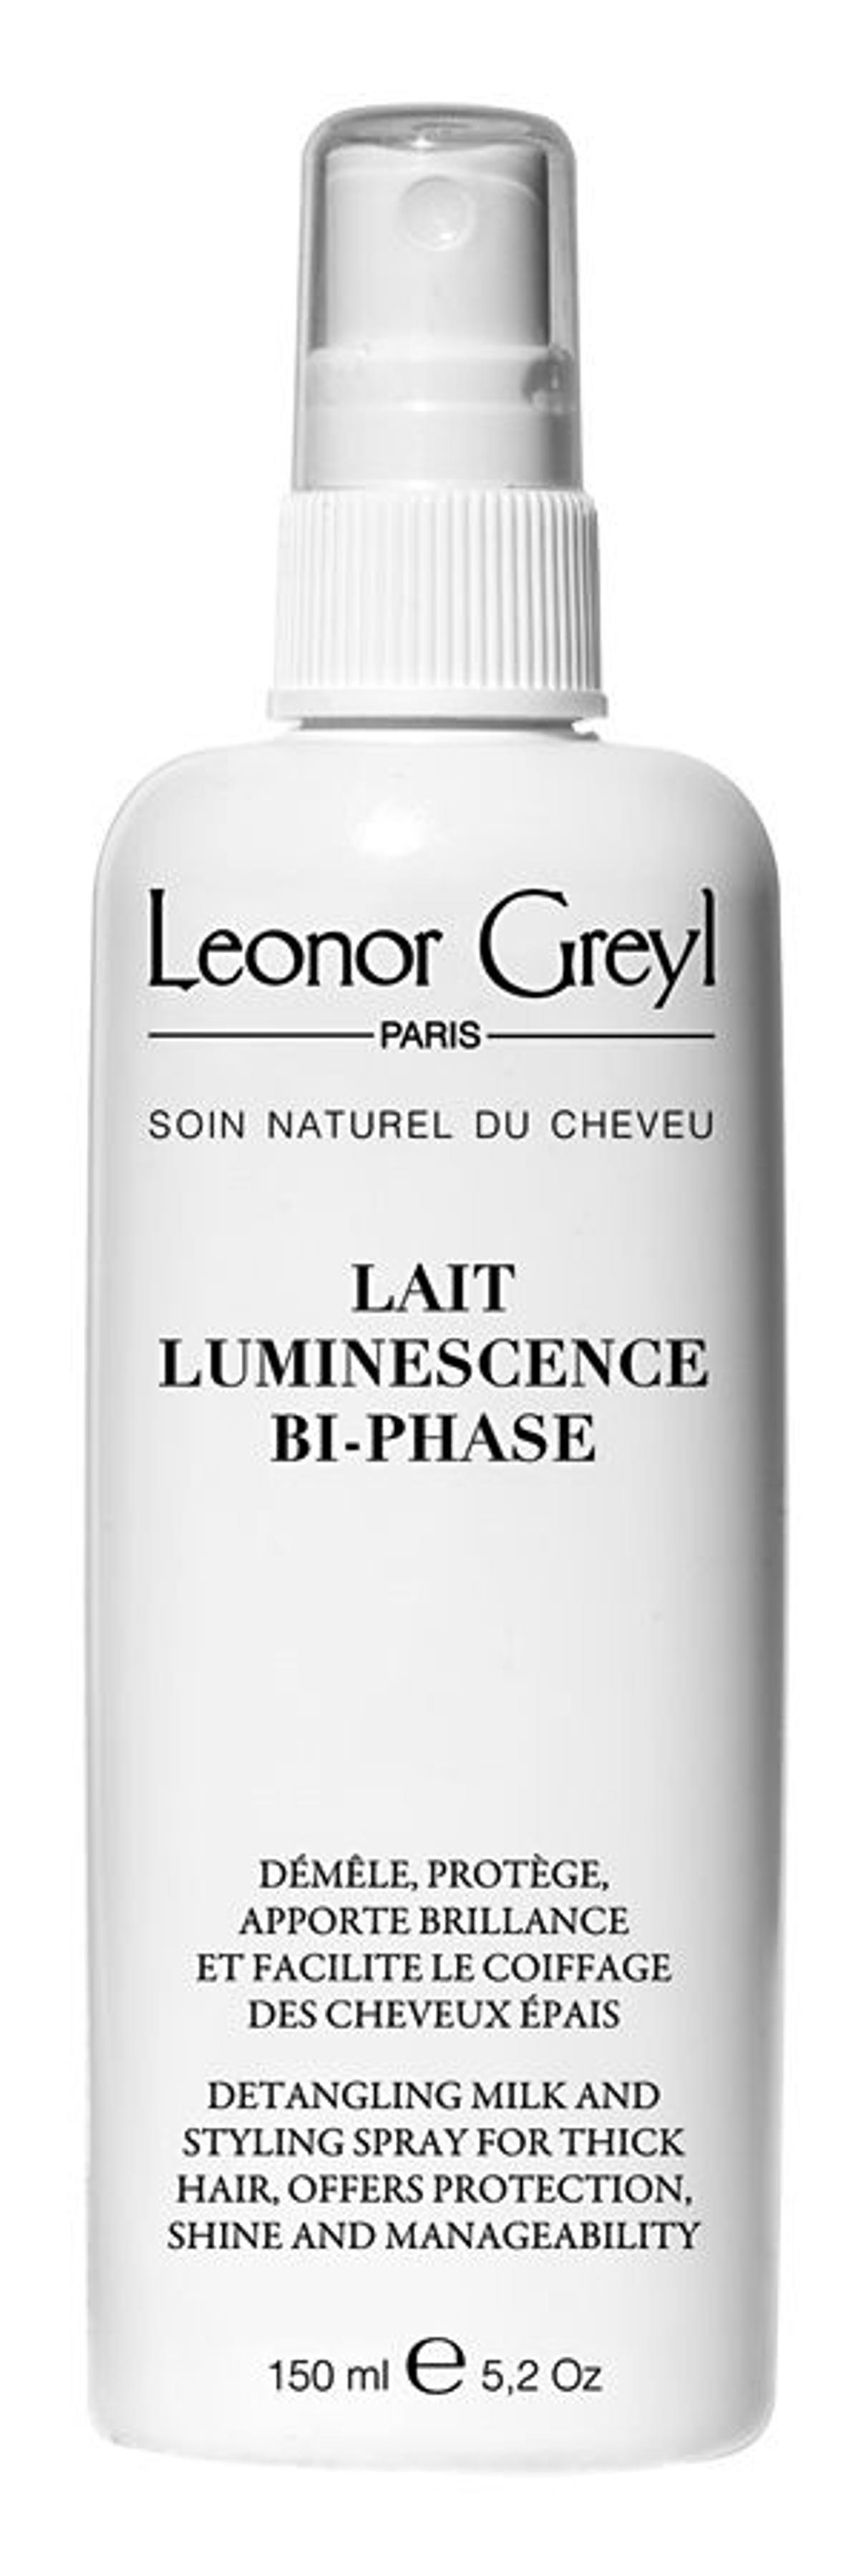 Oda a las trenzas: Lait Luminescence de Leonor Greyl (37 euros)